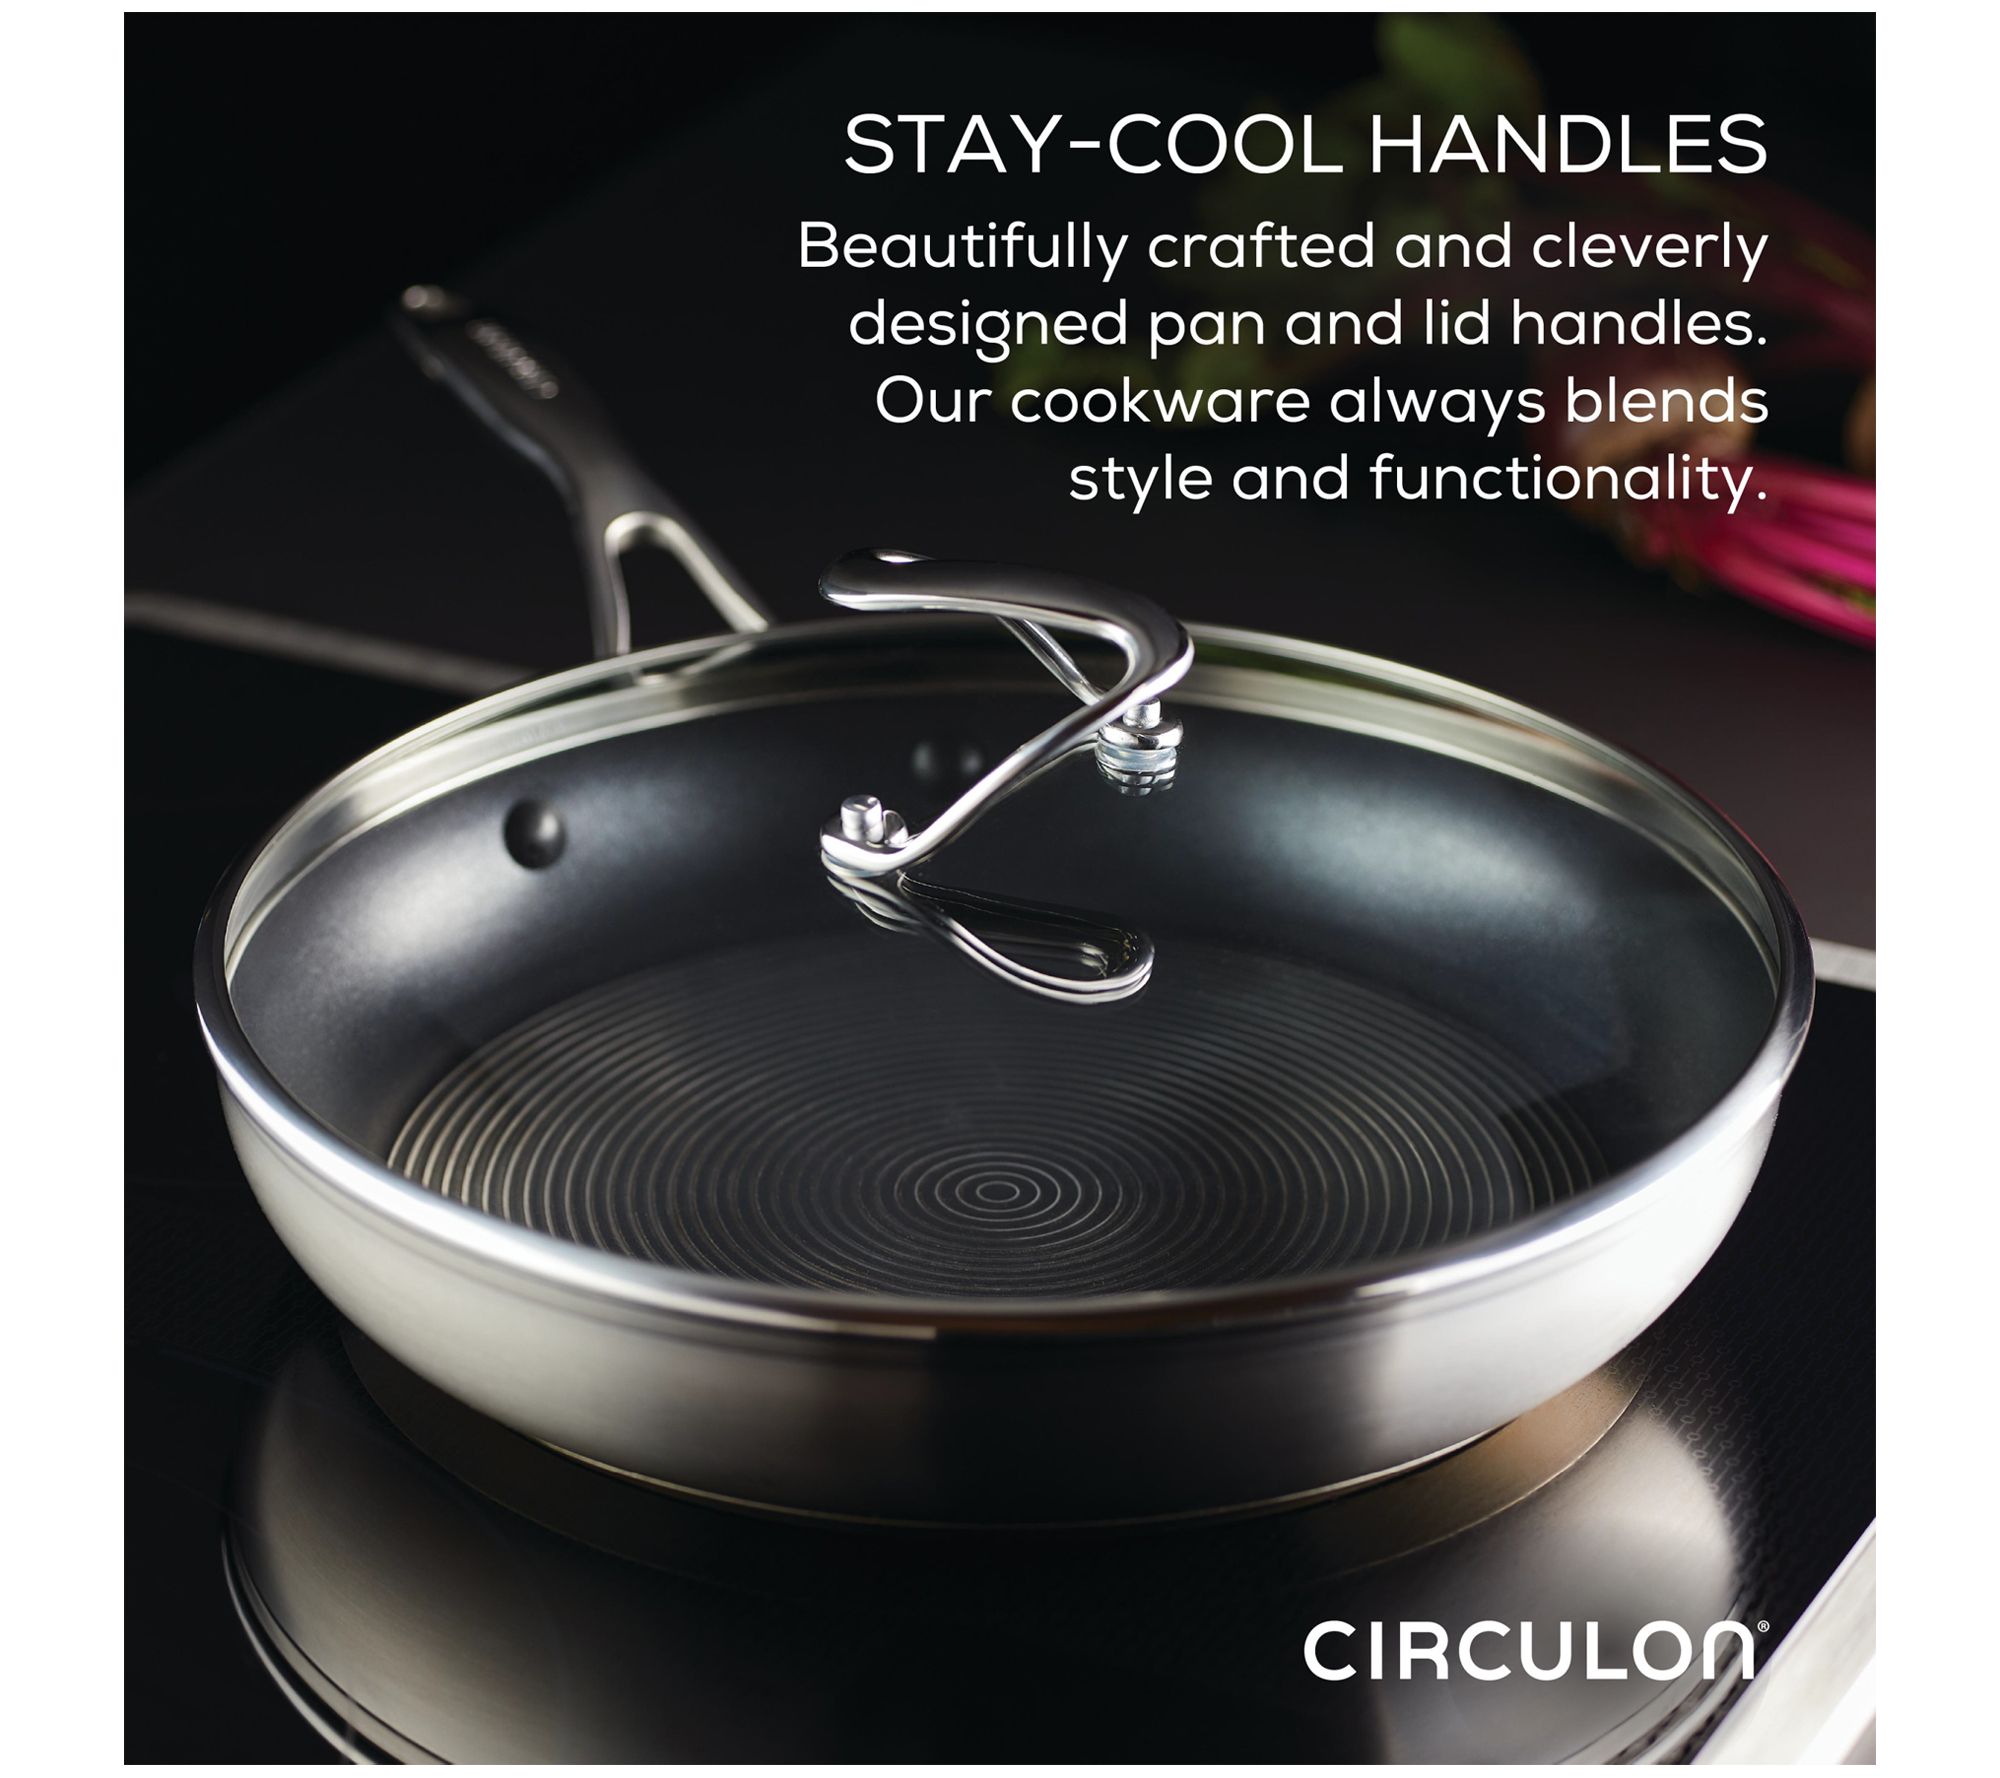 Circulon A1 Series-Scratch Defense Nonstick 12i n Frying Pan 